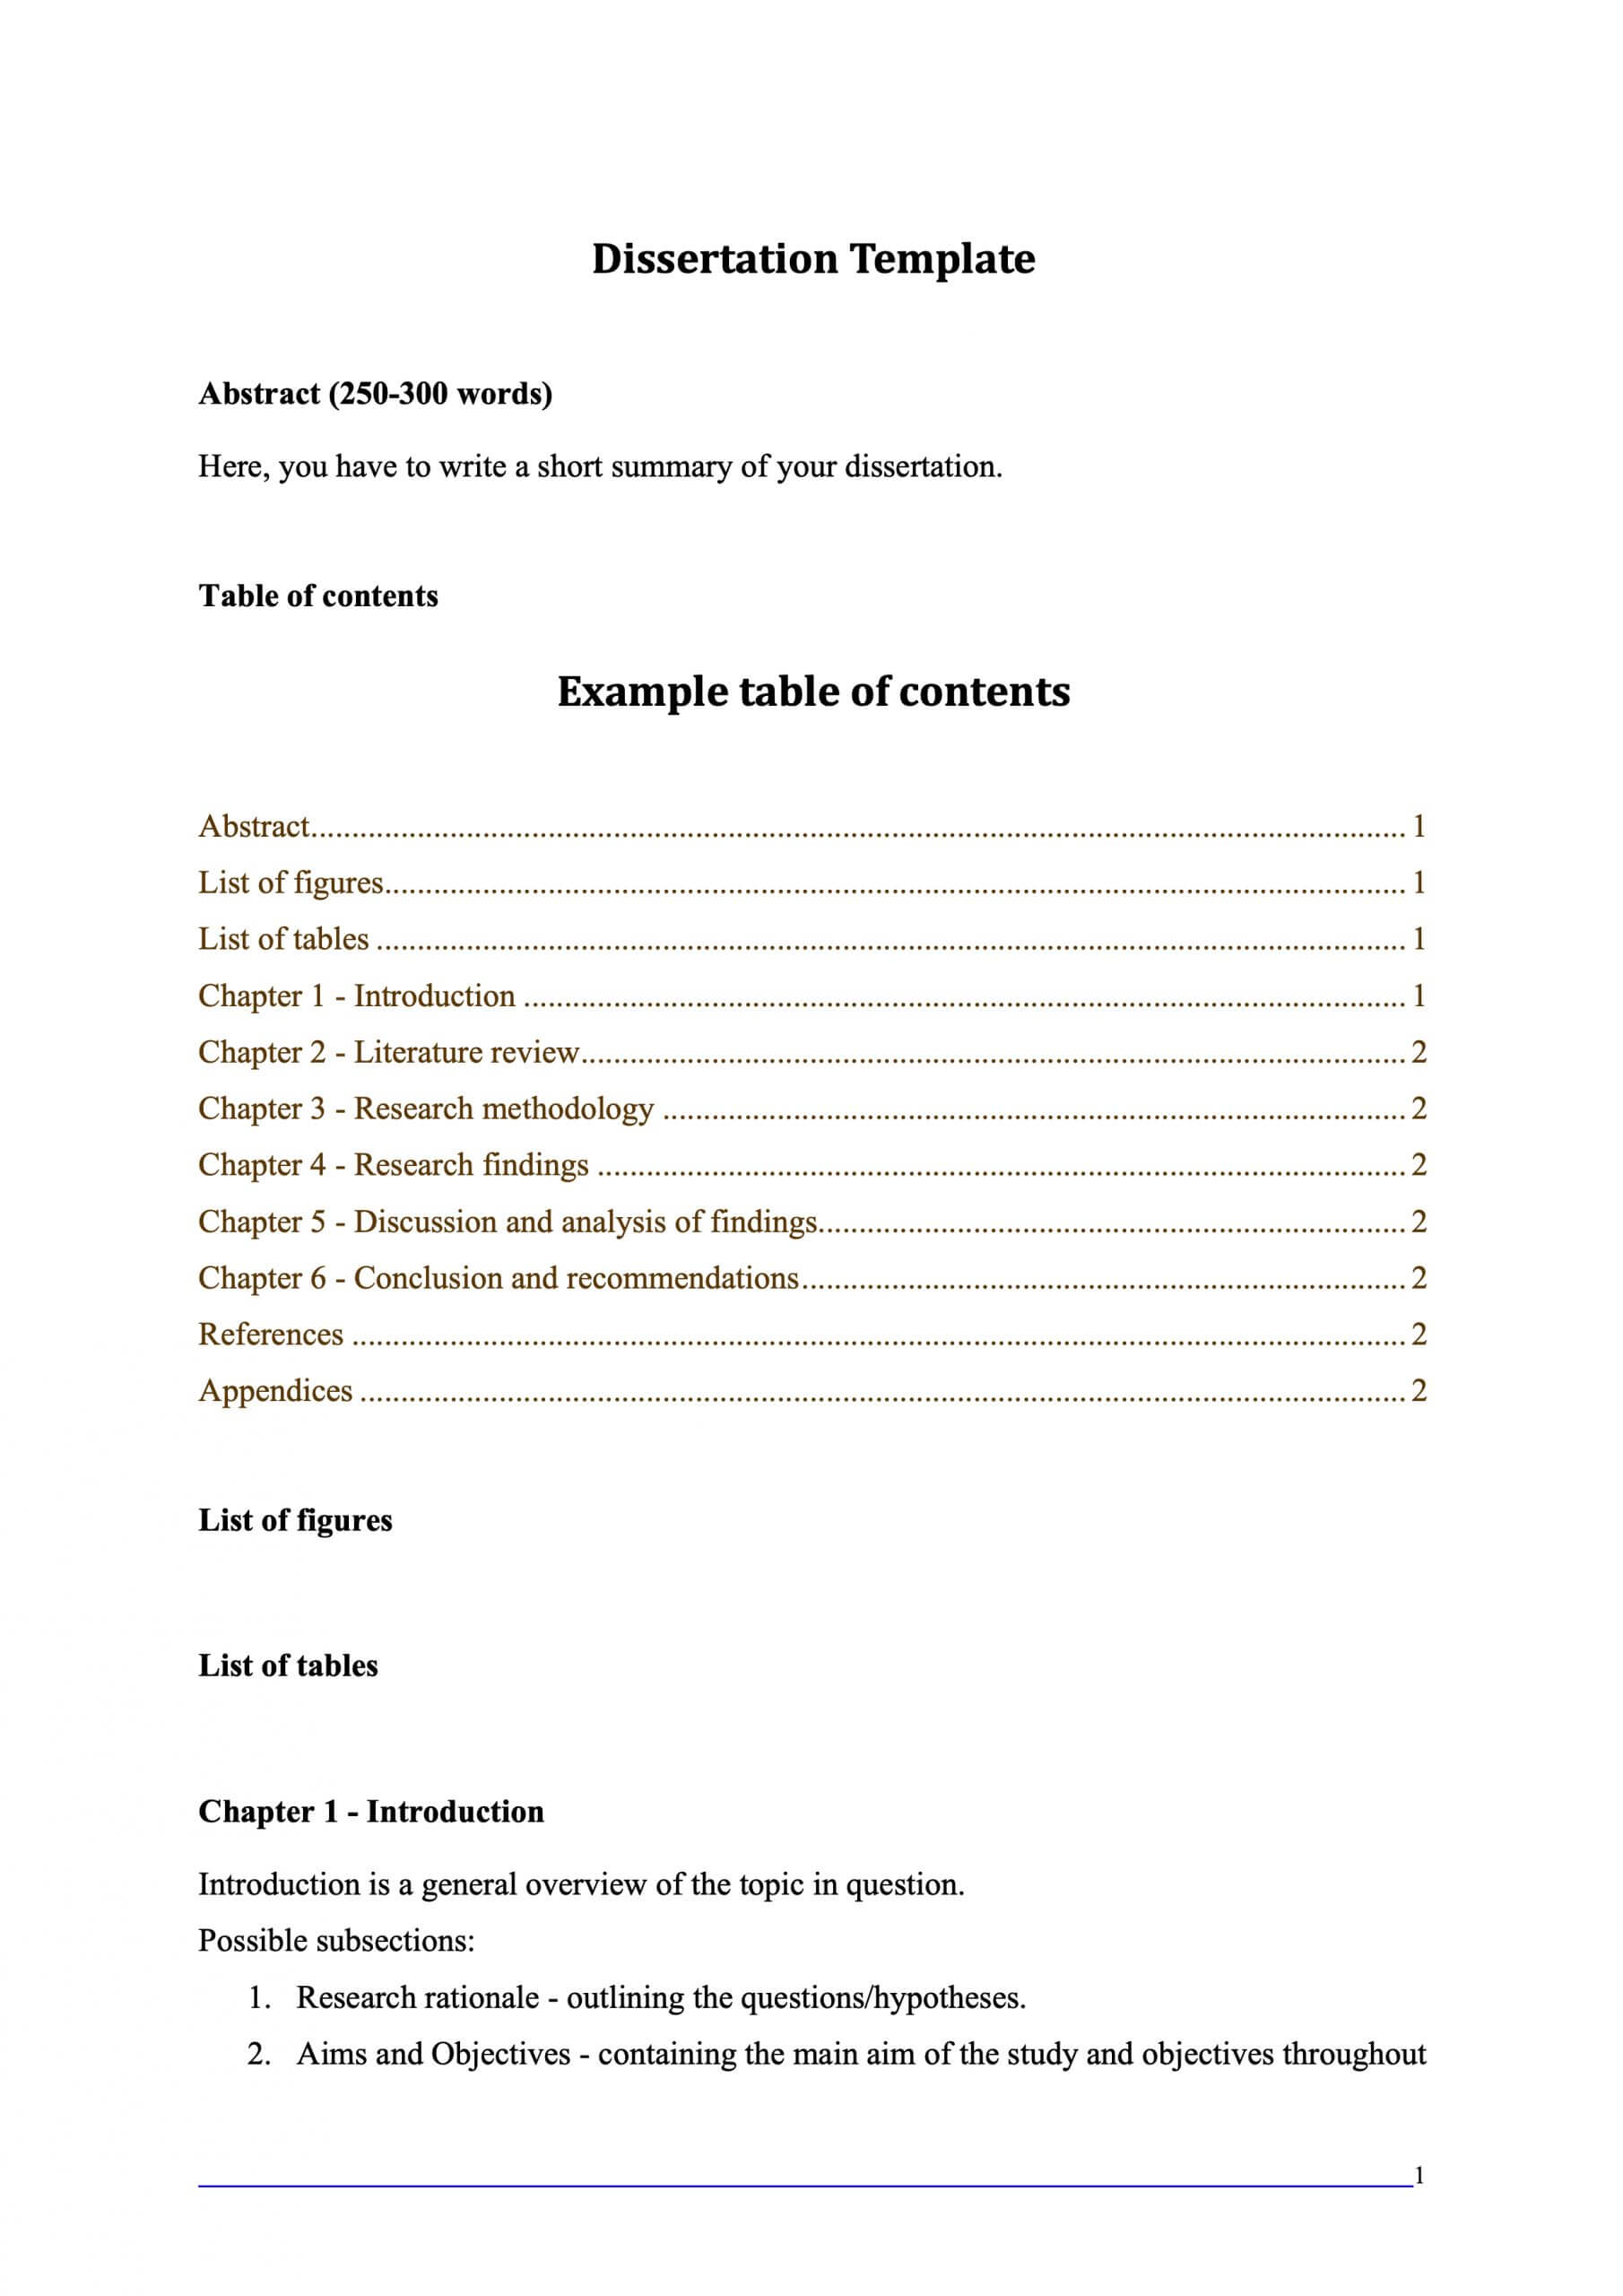 dissertation template google docs